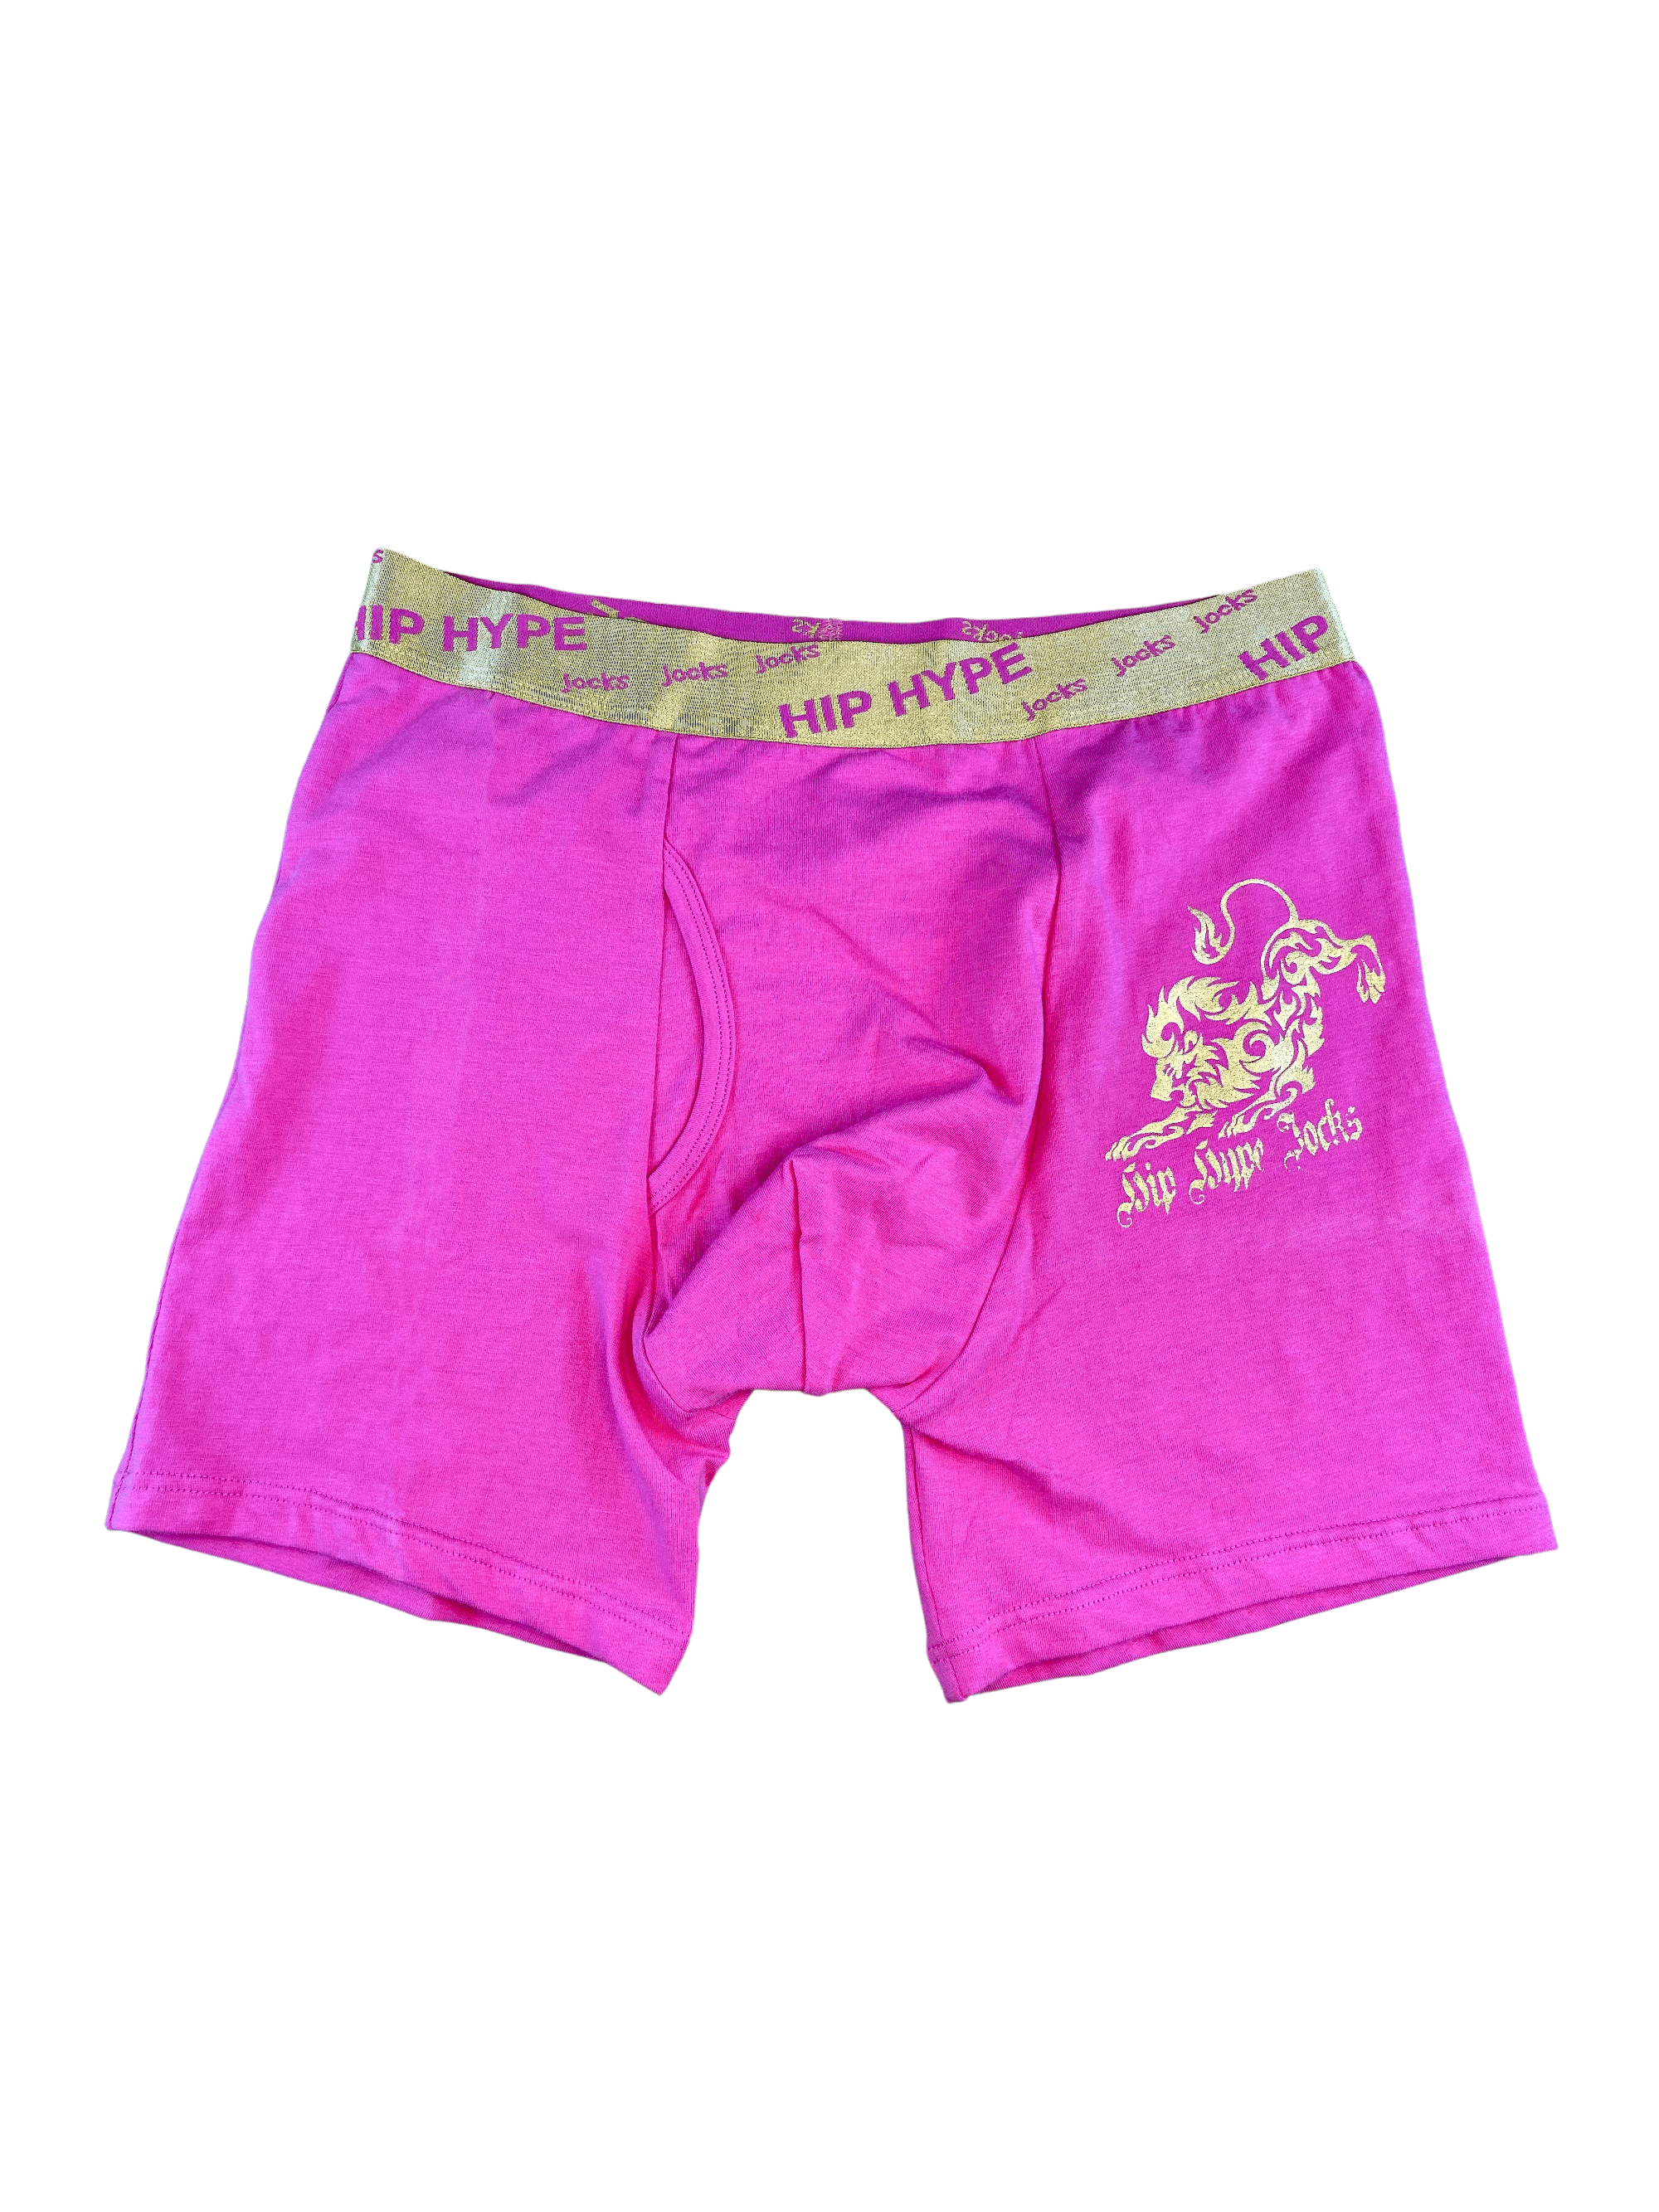 Ethika Bnb Gem Jam Pink Diamond Music Adult Mens Underwear Boxer Briefs  UMS018 - Fearless Apparel